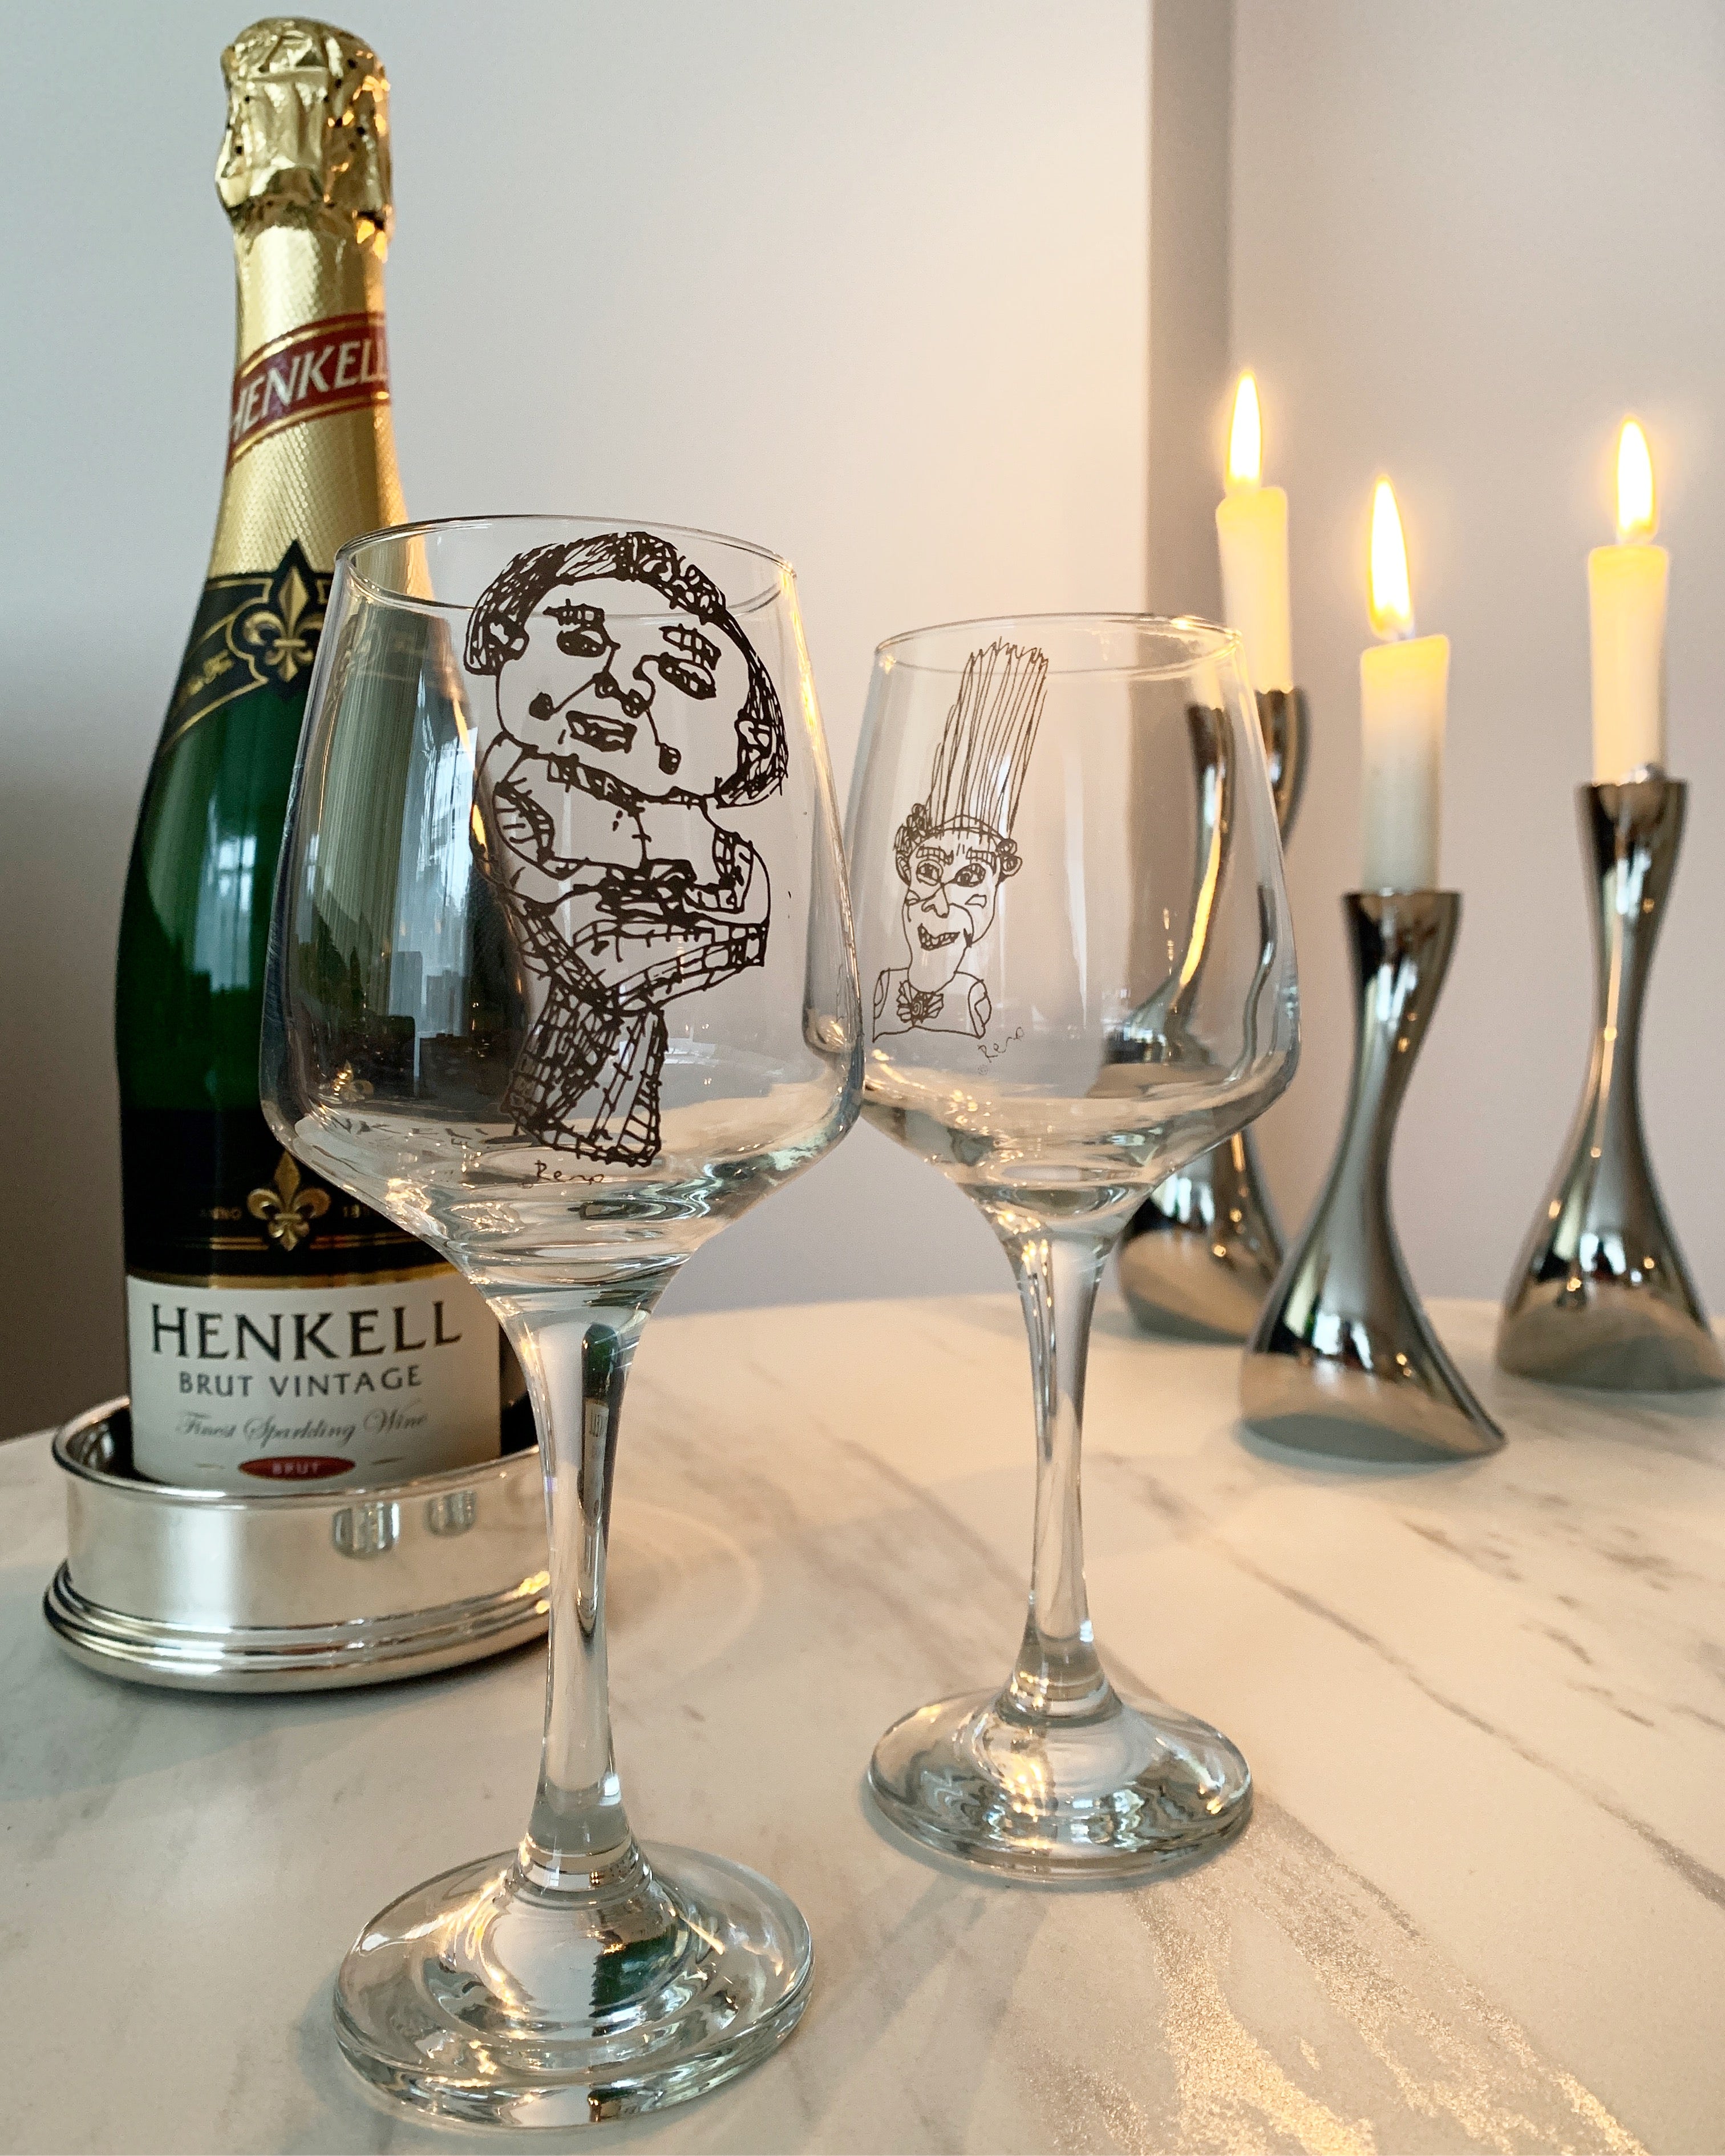 Wanna be a Litle Mermaid Wine Glass - Designremo